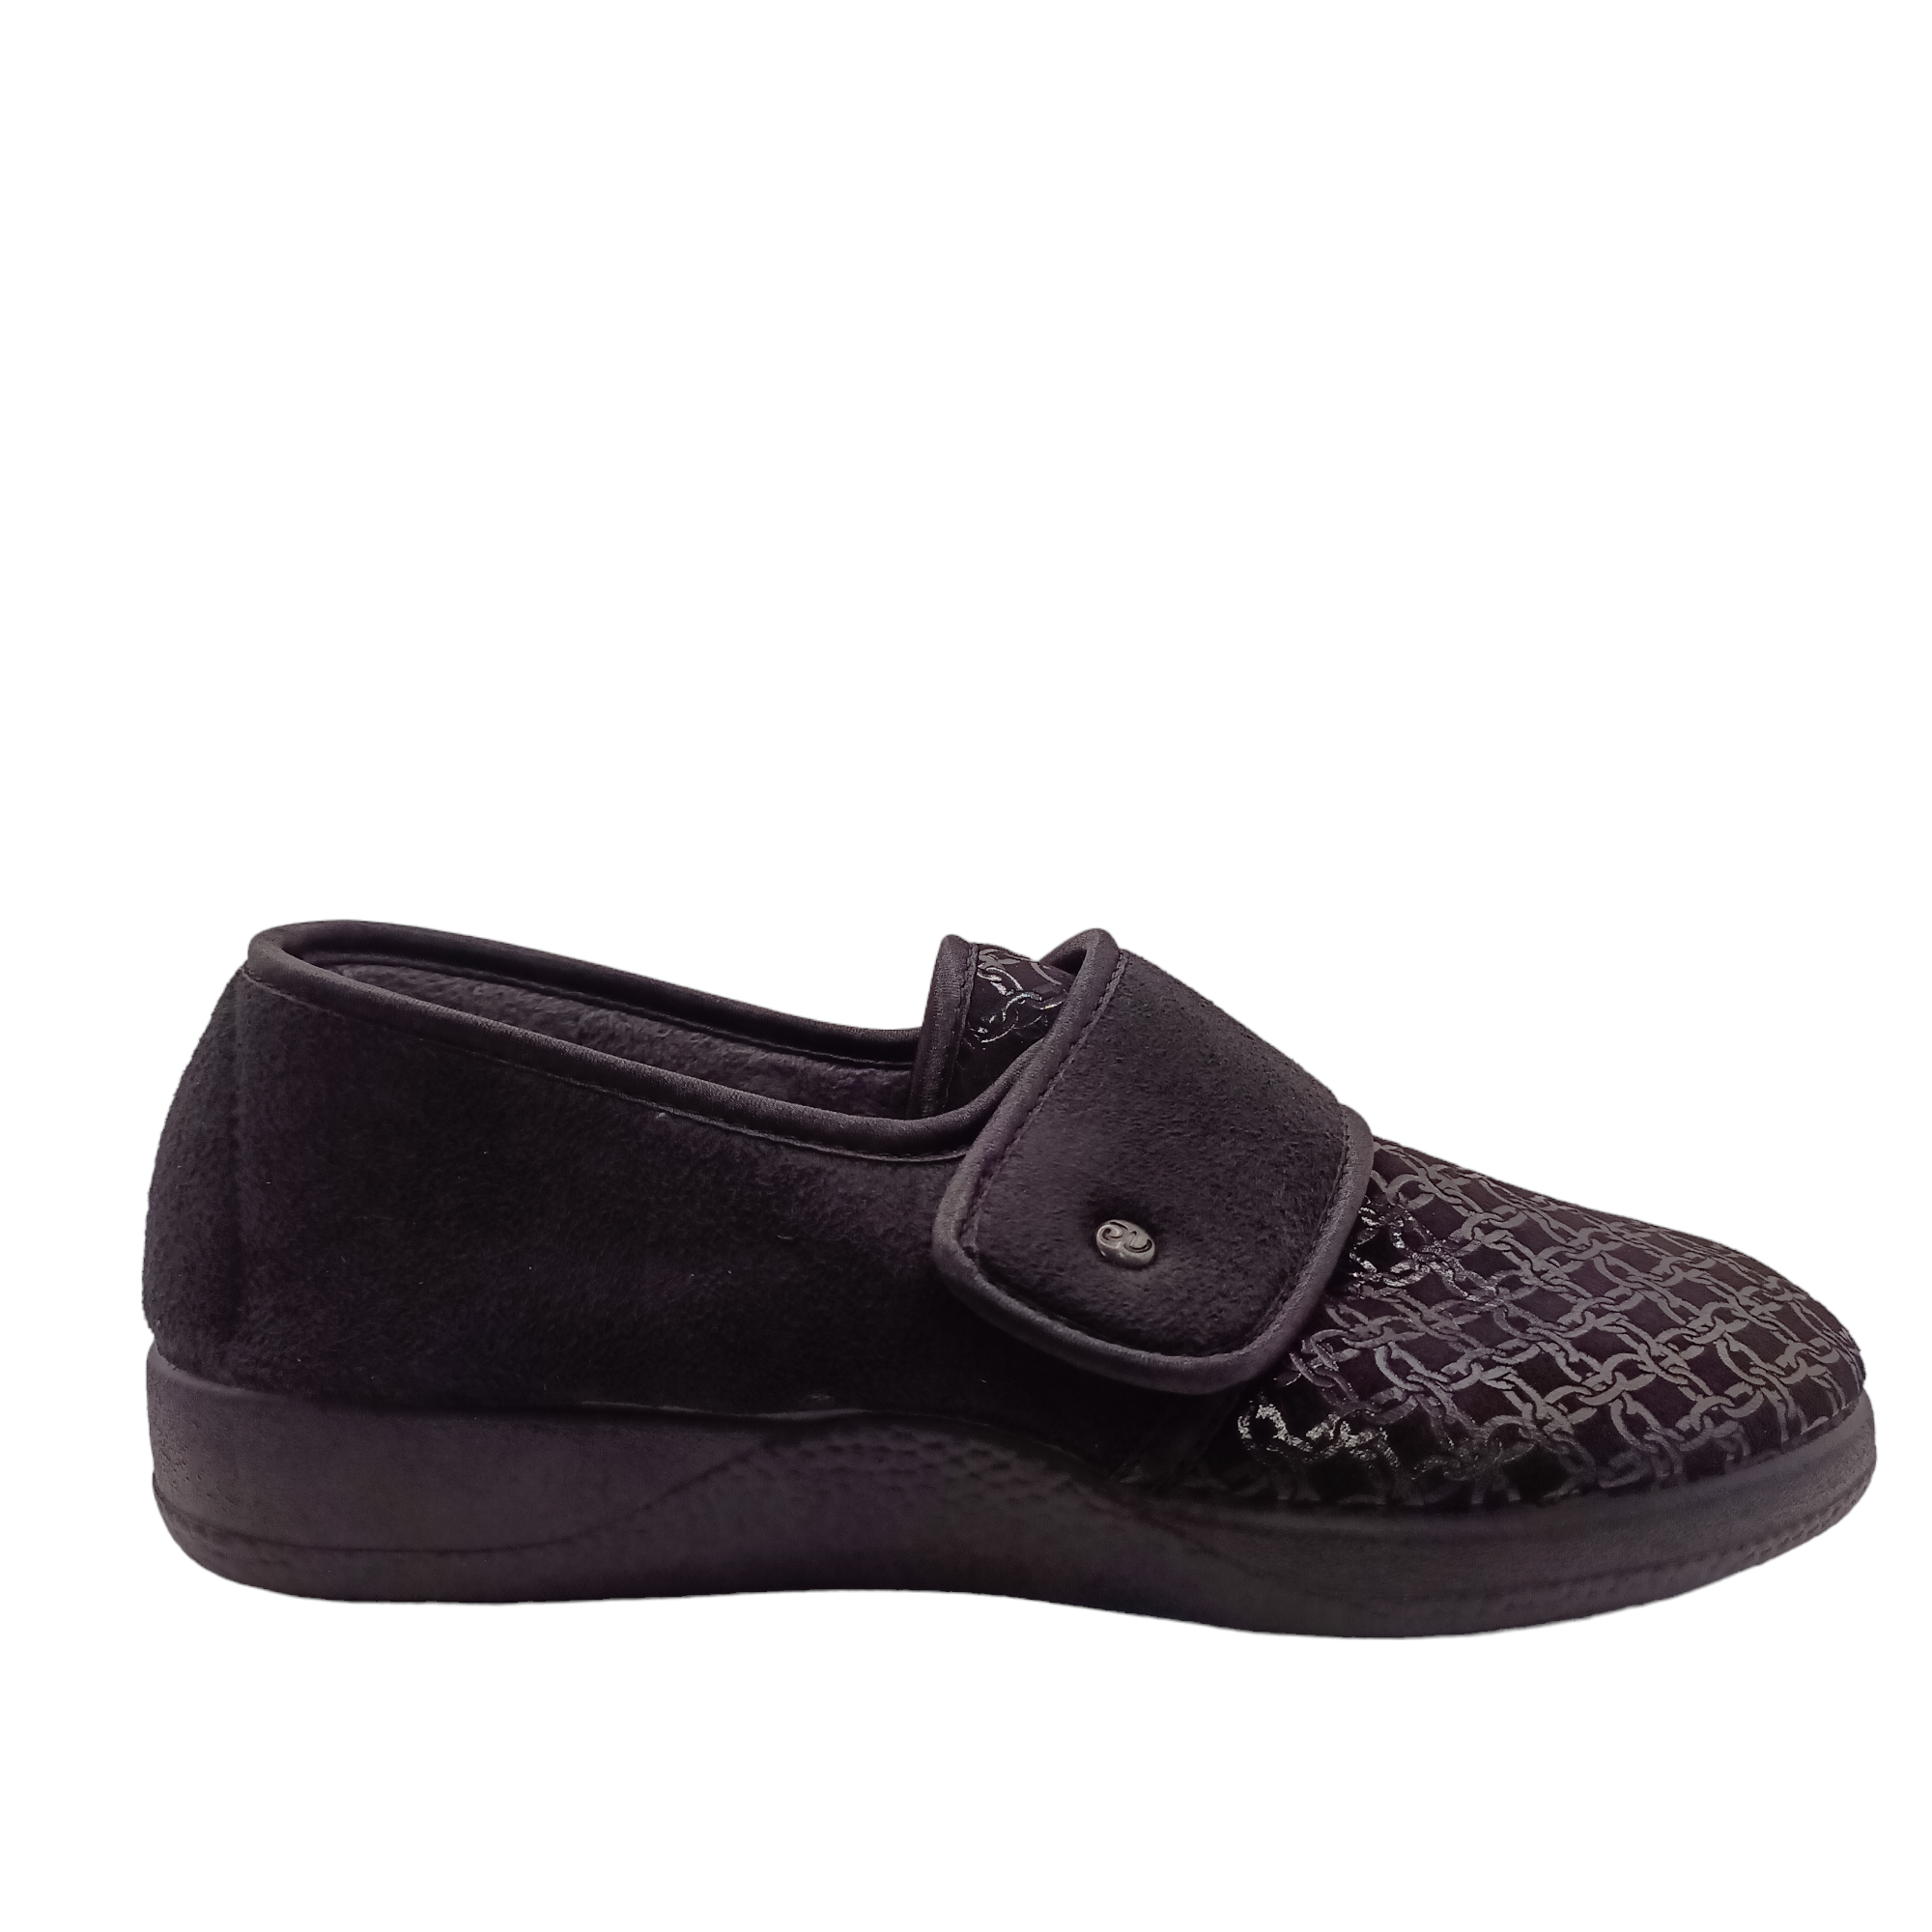 Shop Cadenas DeValverde - with shoe&me - from DeValverde - Slippers - Slipper, Winter, Womens - [collection]